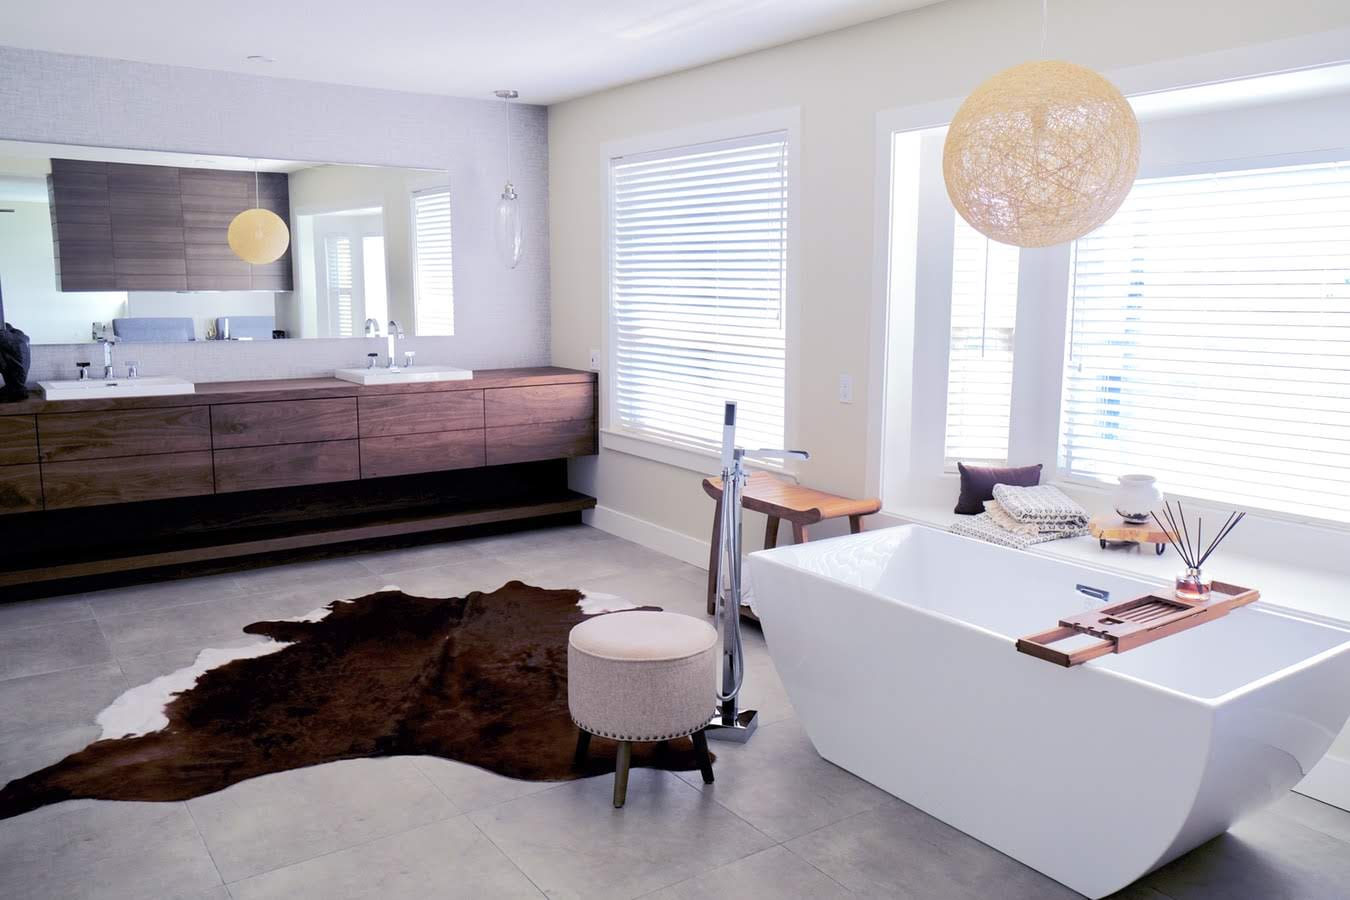 15 Amazing Modern Bathroom Floor Tile Ideas and Designs